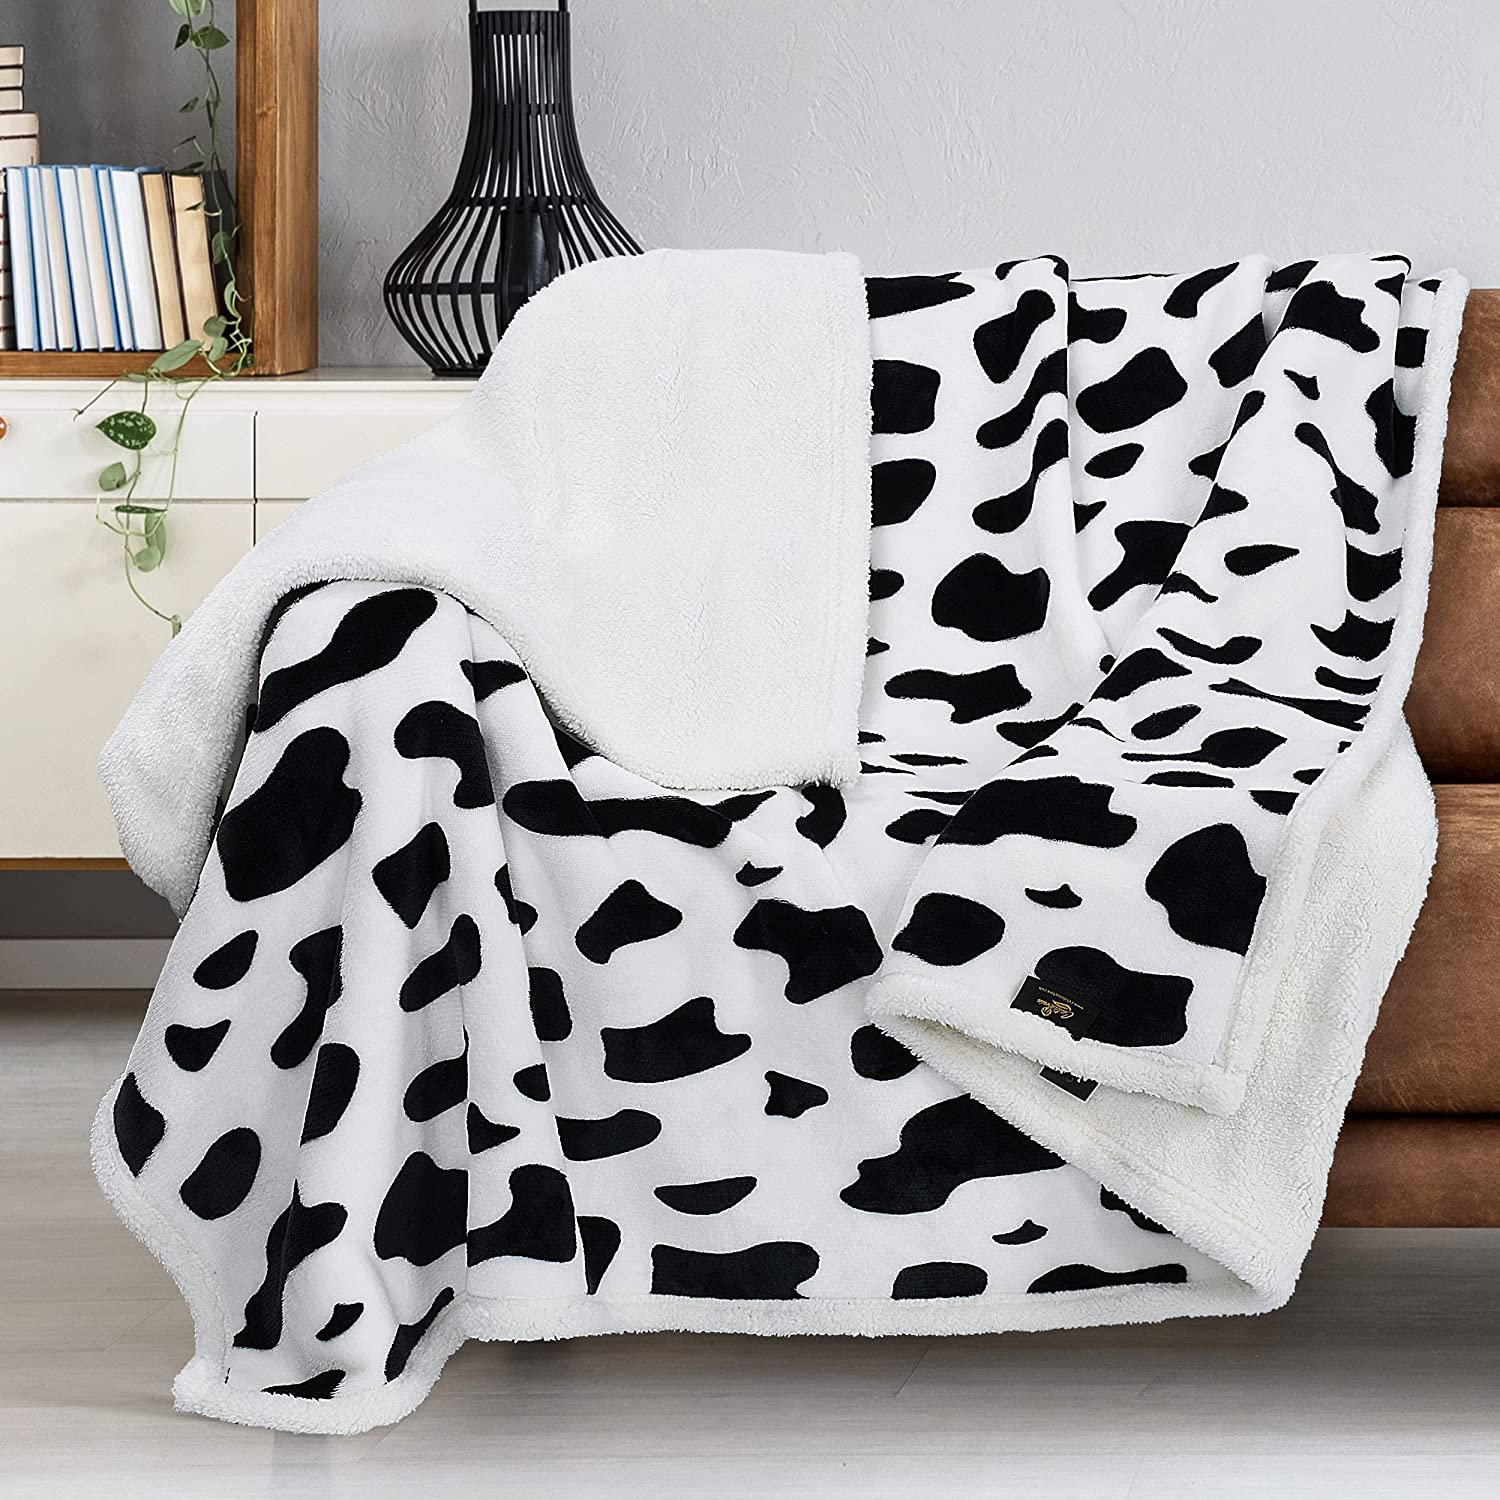 Se7en Worst Cow Print Throw Blanket Methods